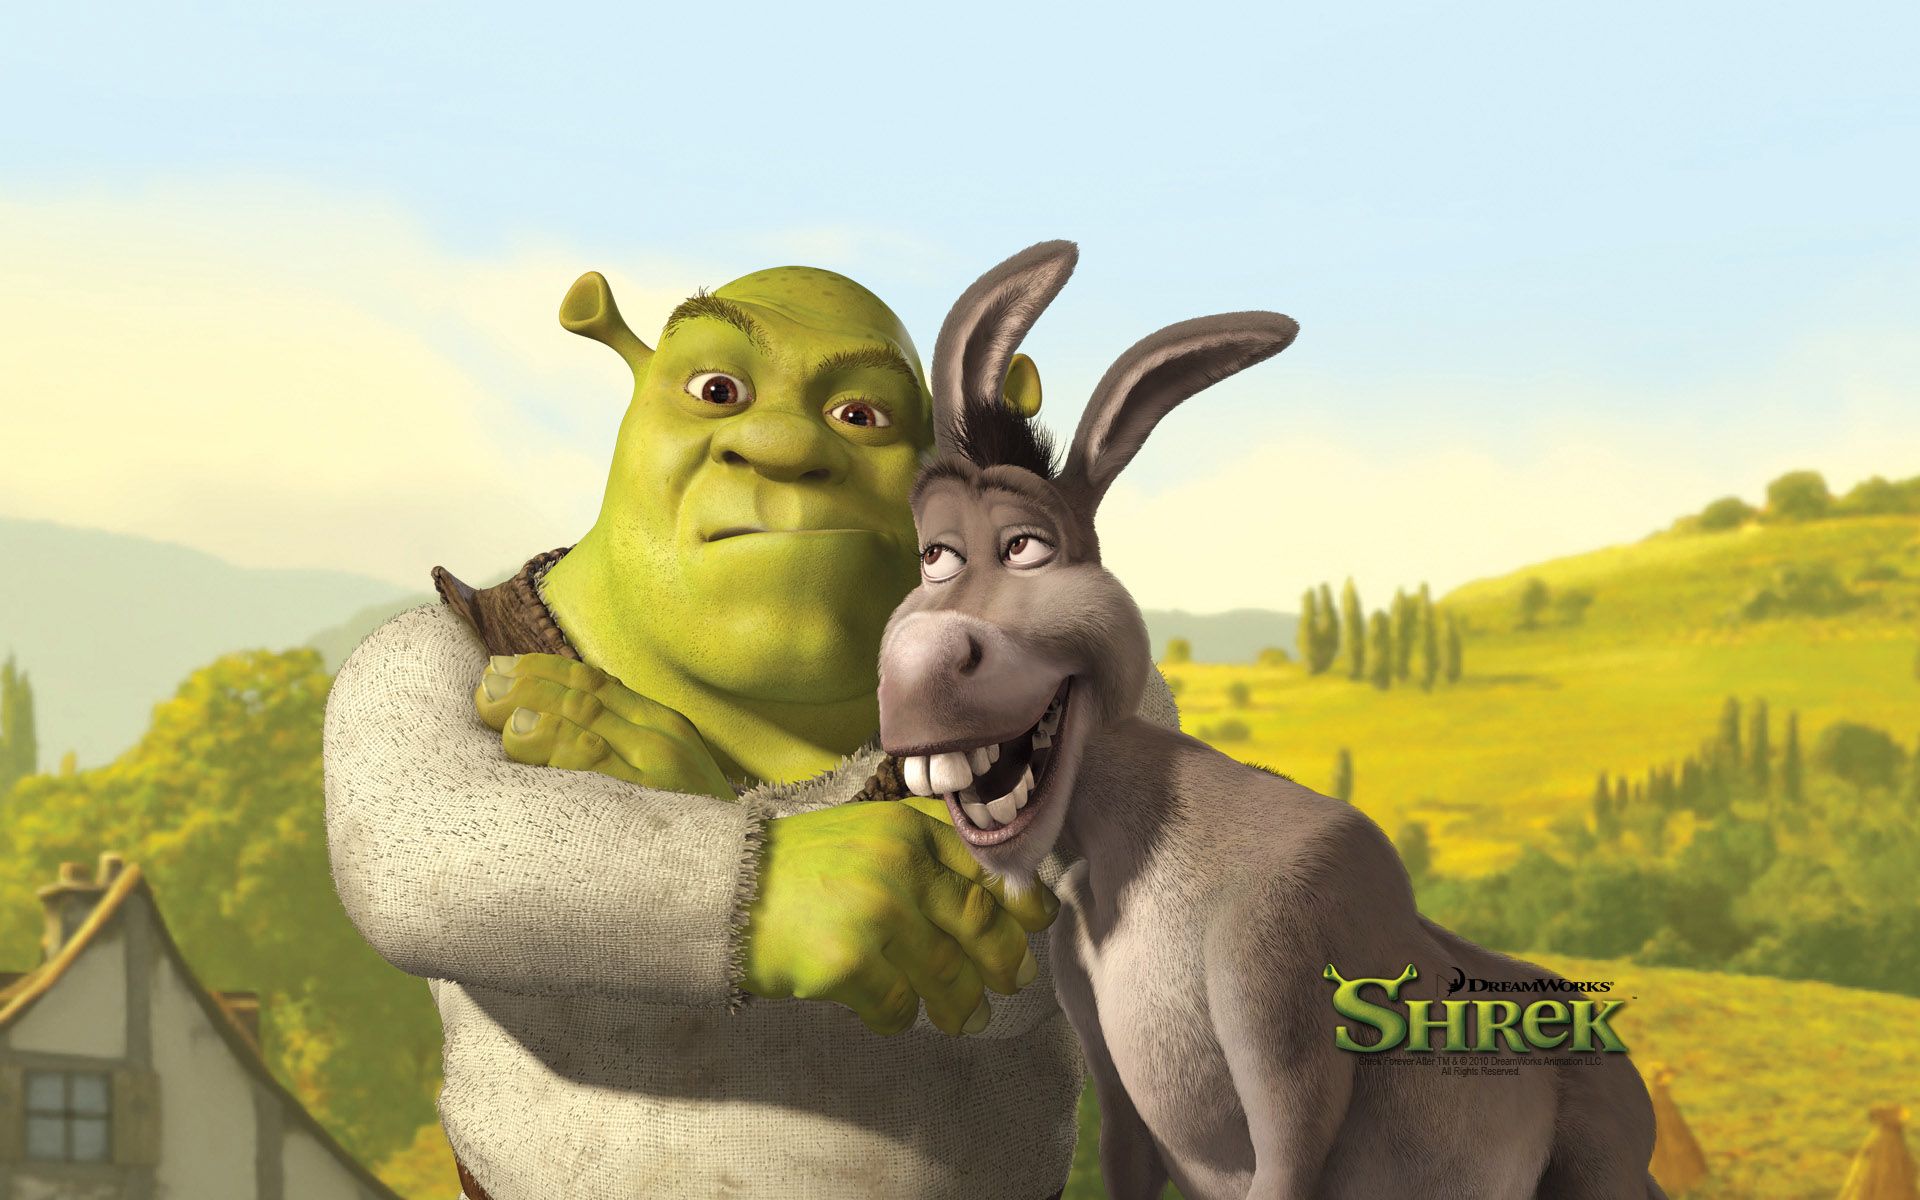 Funny Shrek and Donkey Desktop Wallpapers 64269 1920x1200px